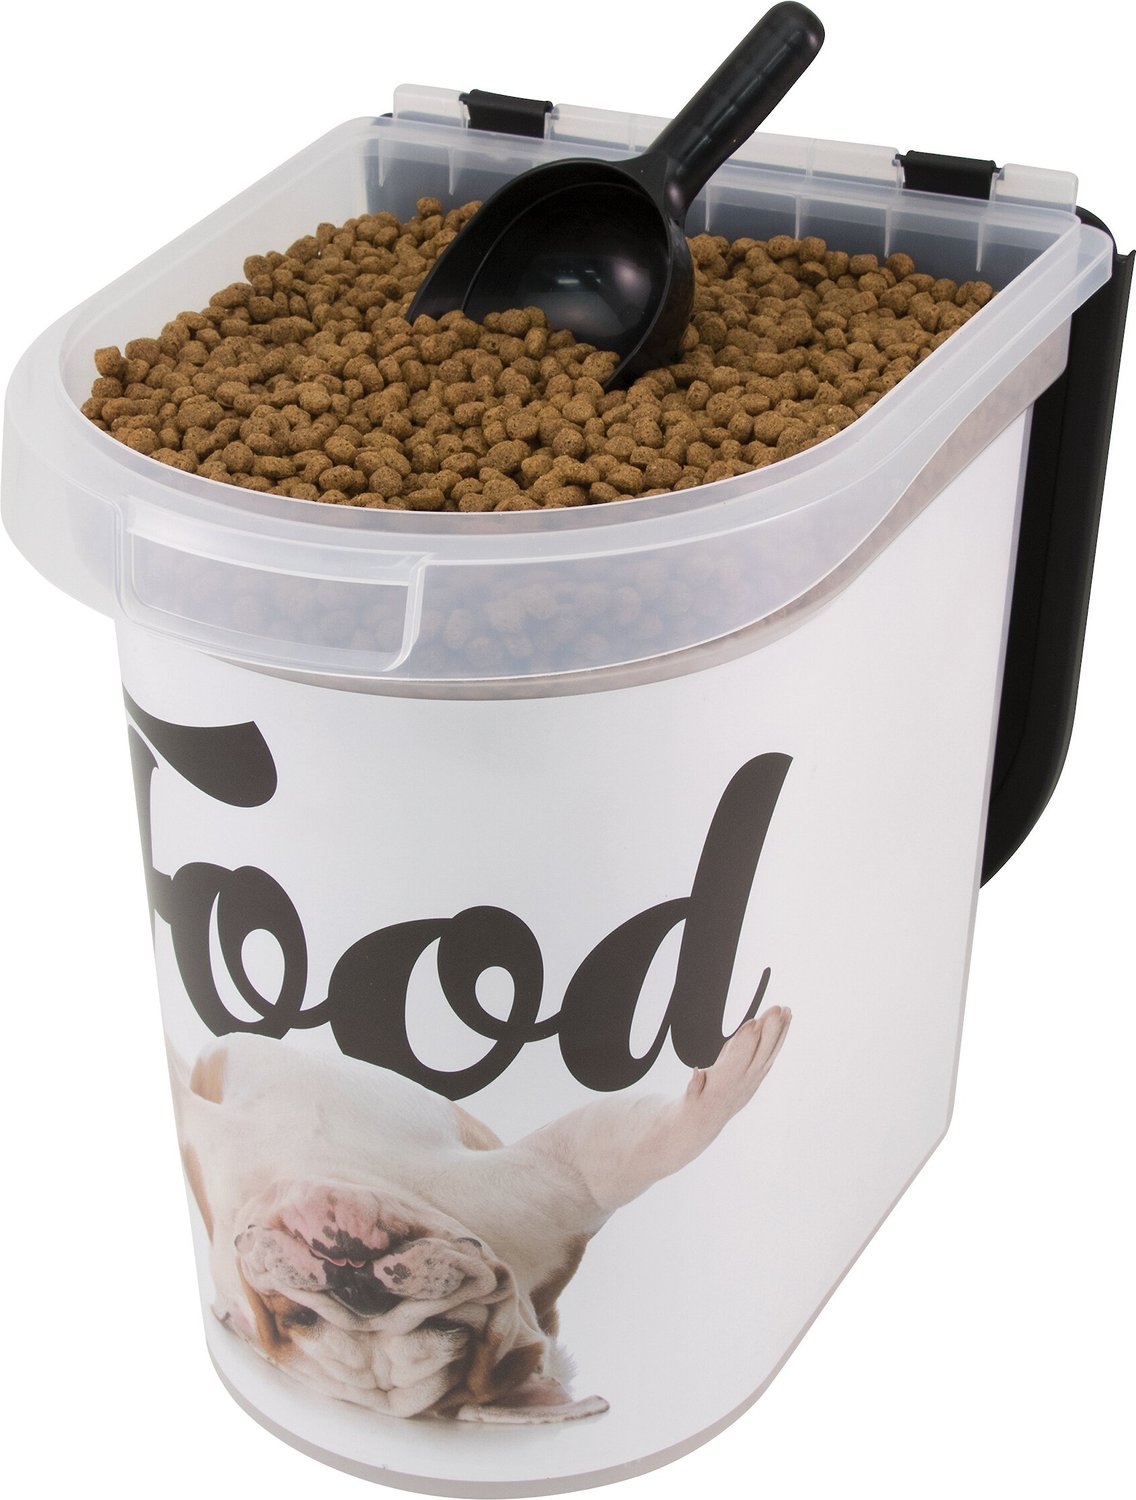 PAW PRINTS Bulldog Pet Food Storage Container, 26lb